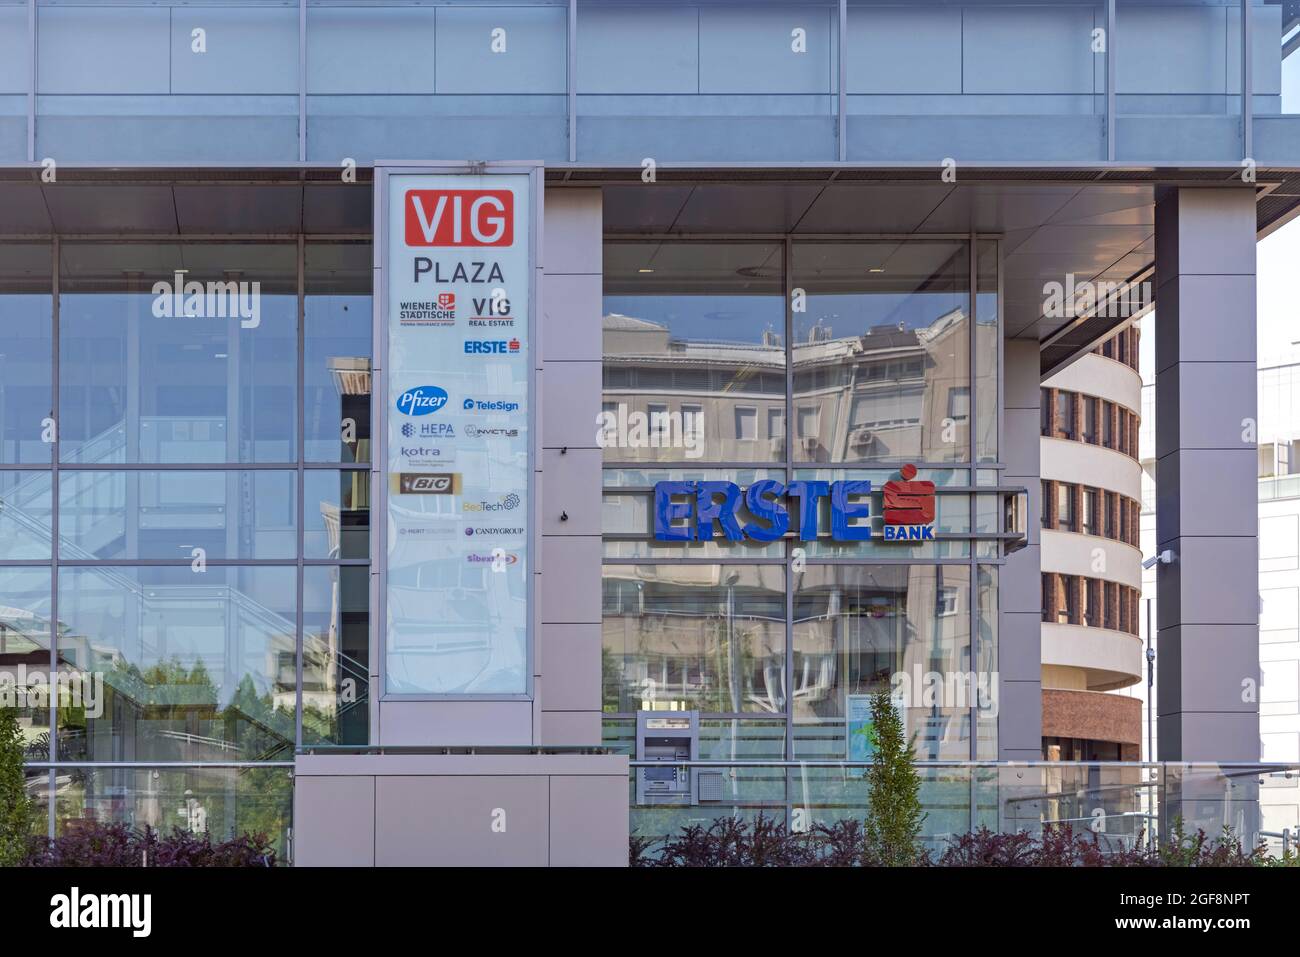 Belgrade, Serbia - August 10, 2021: Vig Plaza Sign Business Office Building at New Belgrade. Stock Photo